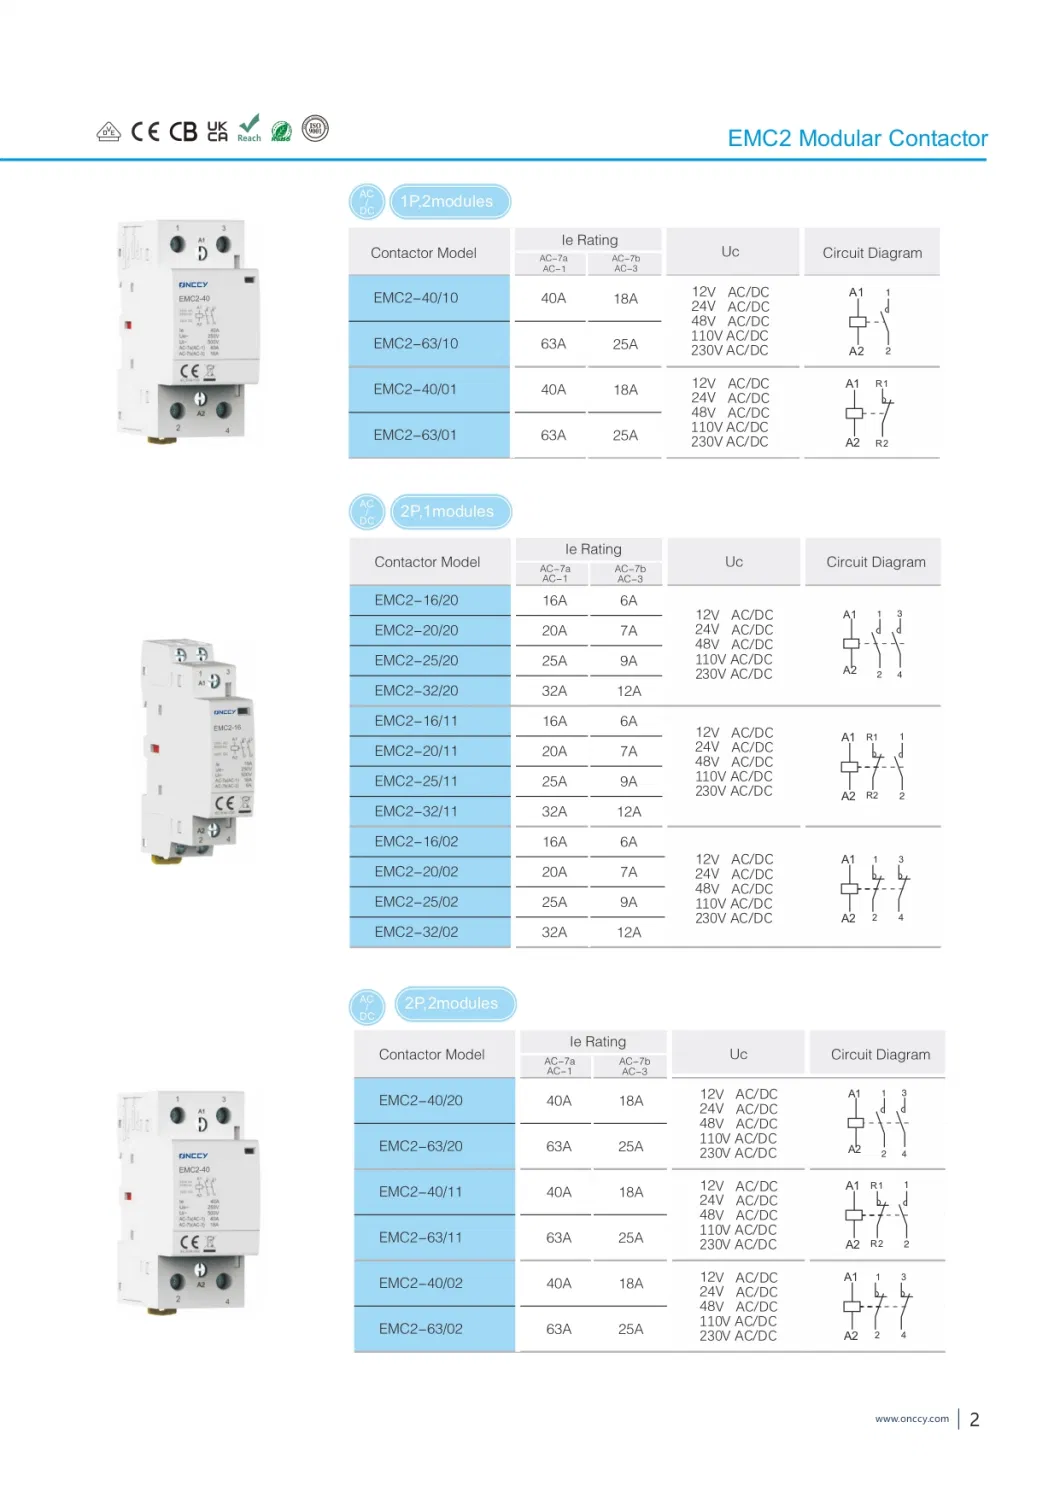 Onccy 12V-230V 16A-63A EMC2 3p 2, 3modules AC/DC Modular Contactor 2 Pole Contactores Magnetic Electric